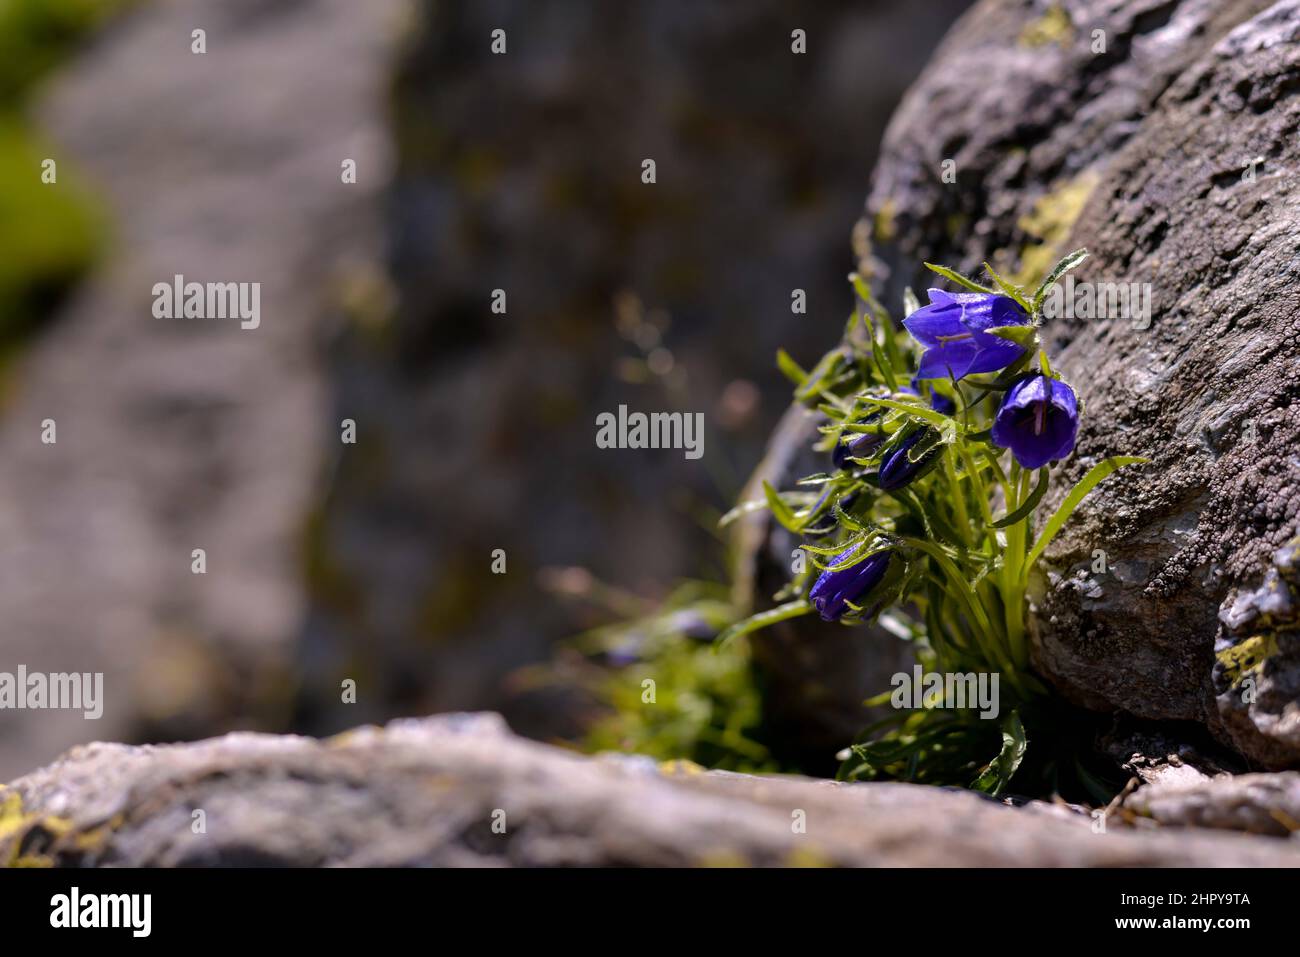 Closeup shot of violet bellflower blooming in the garden Stock Photo